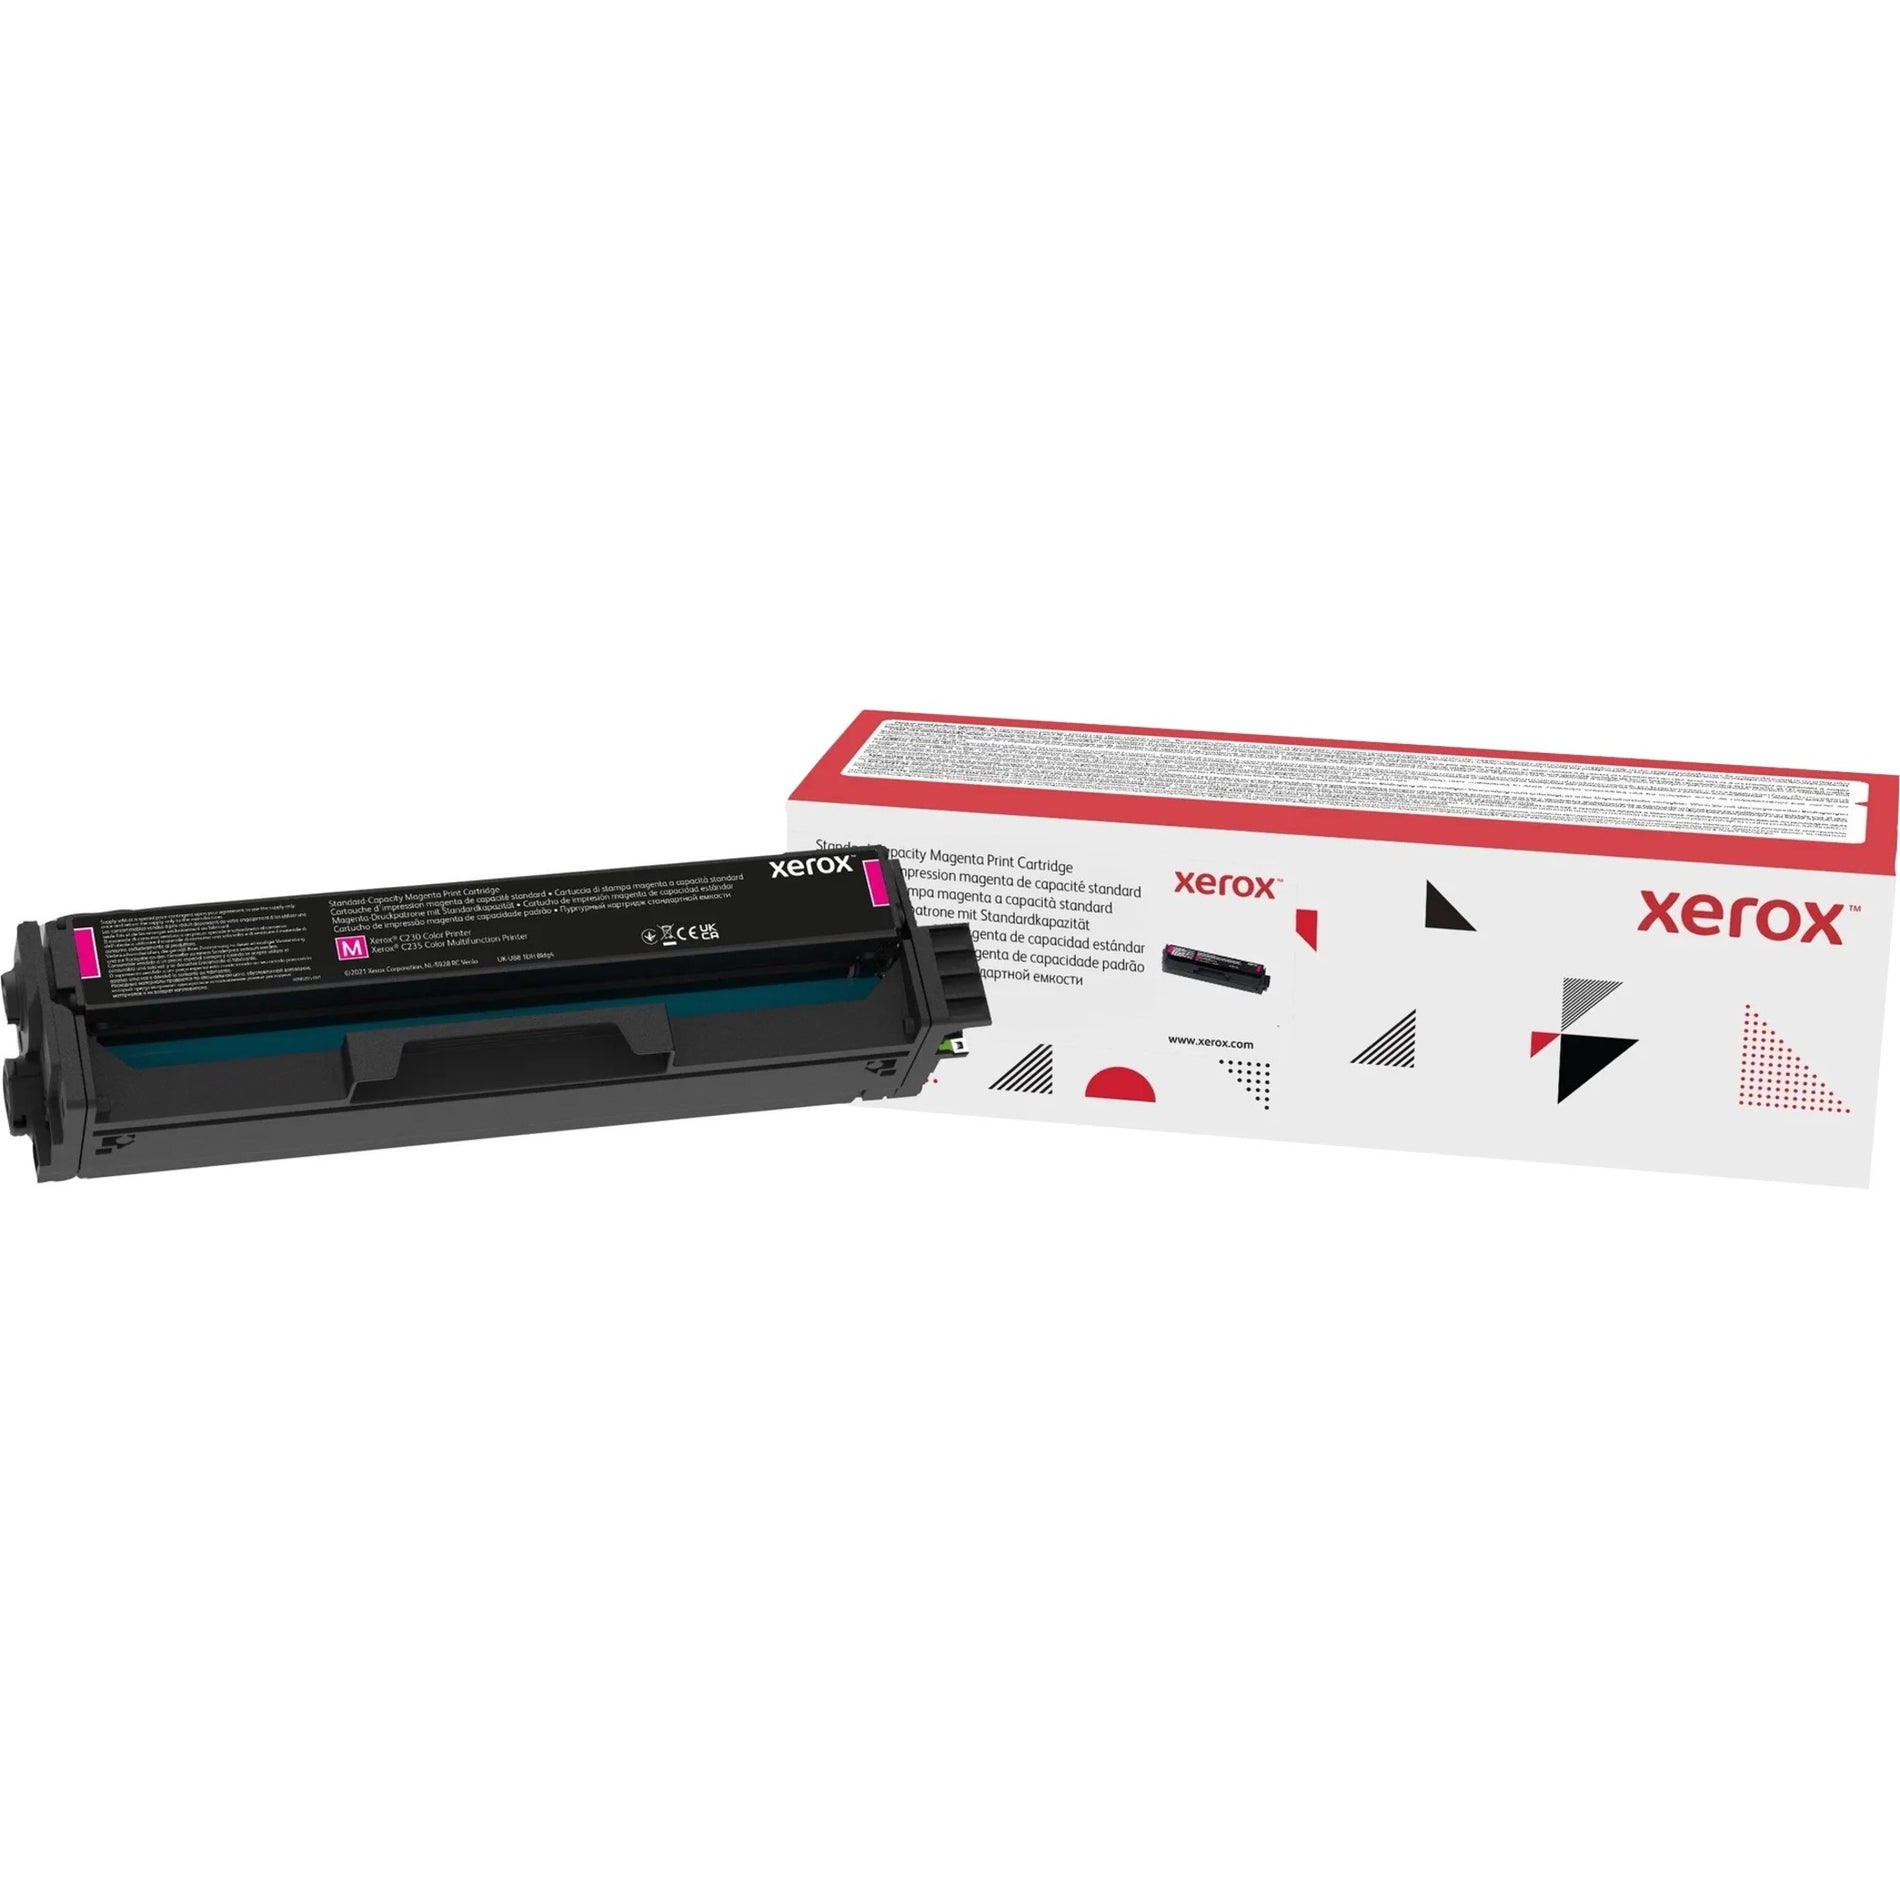 Xerox 006R04385 C230 / C235 Magenta Standard Capacity Toner Cartridge (1,500 pages), Original